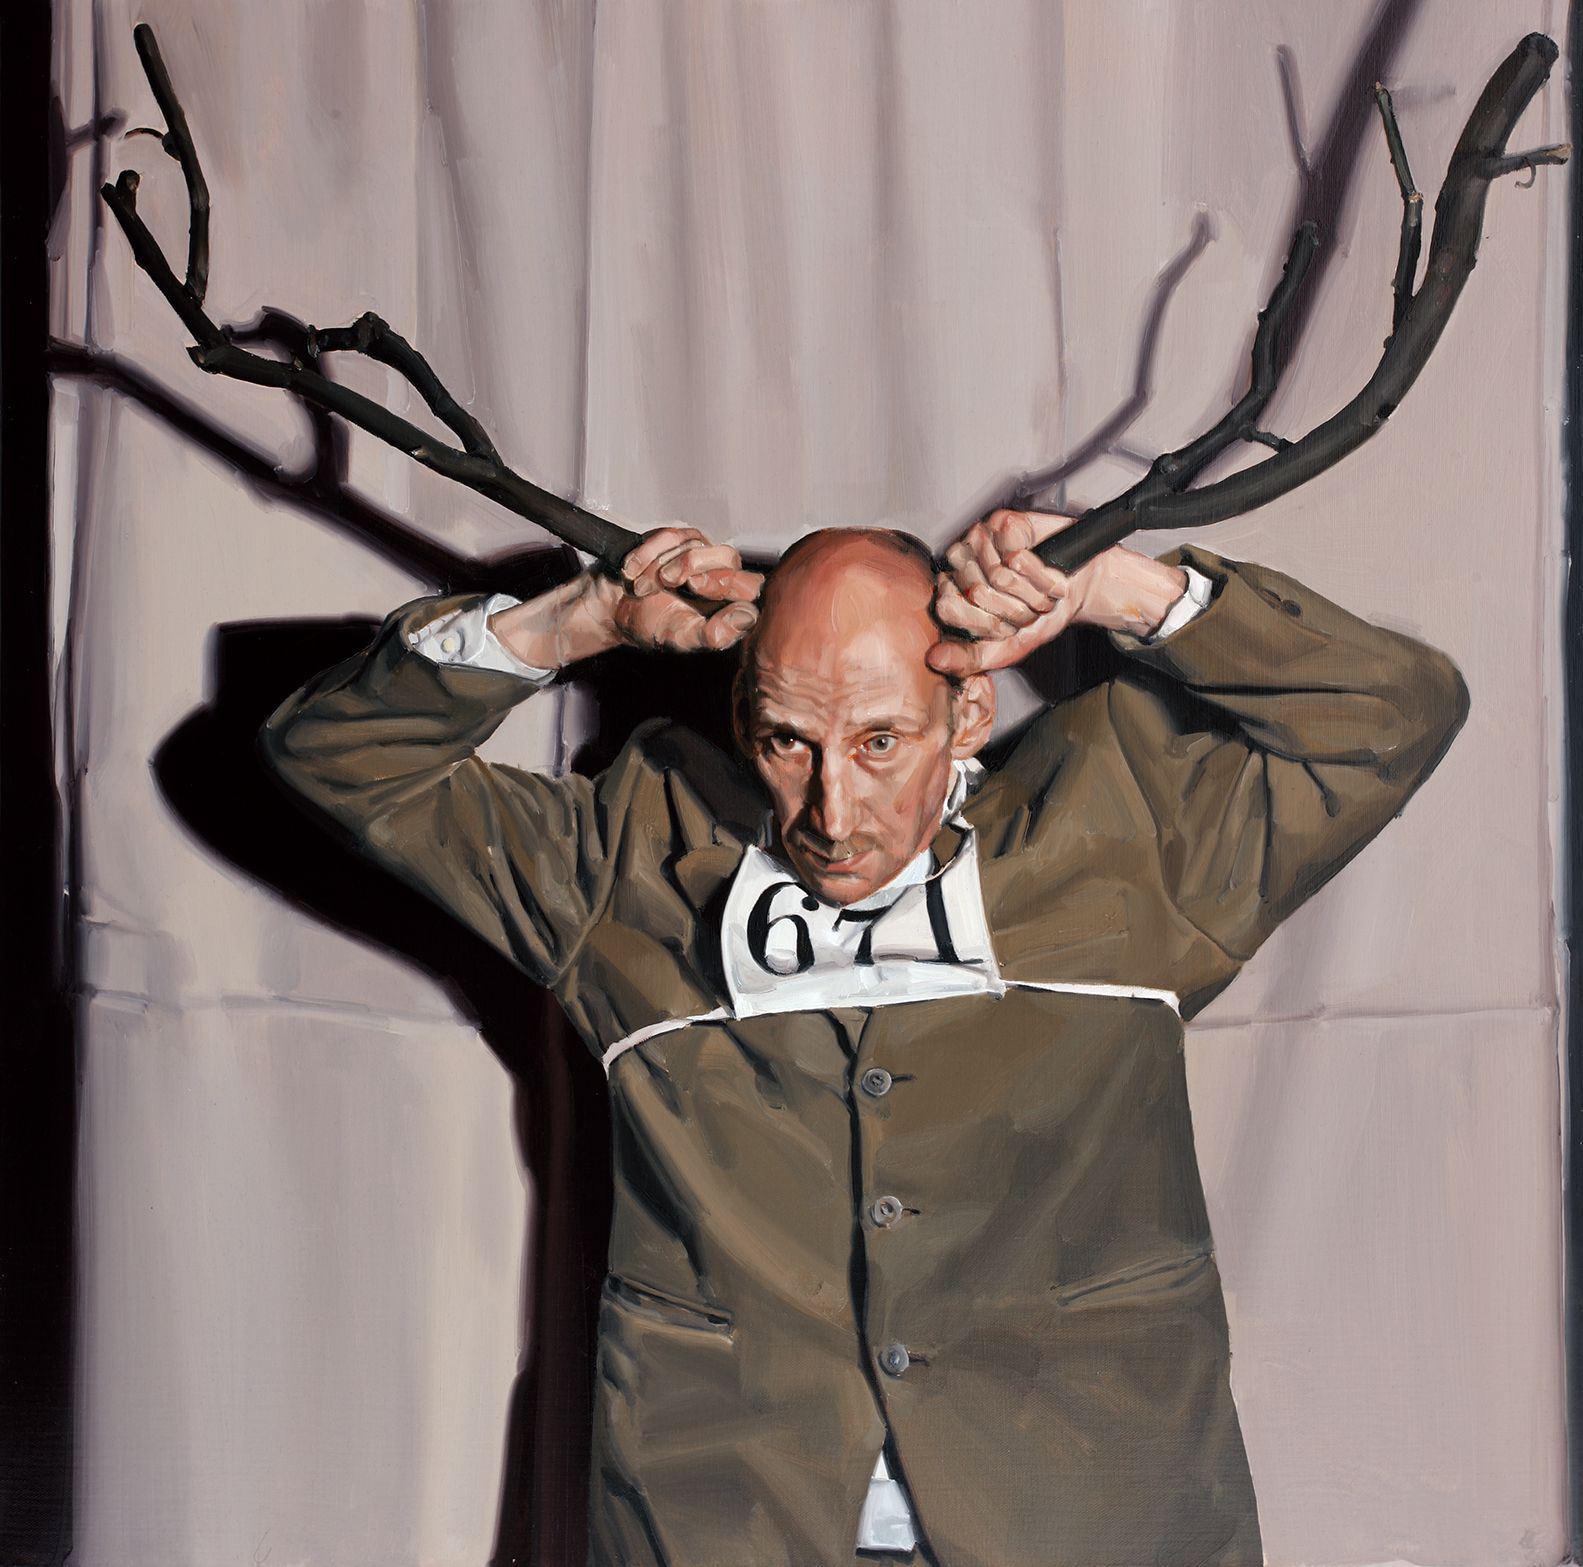 Chris Crick Mimicking deer, 2010, Oil on canvas, 100 x 100cm